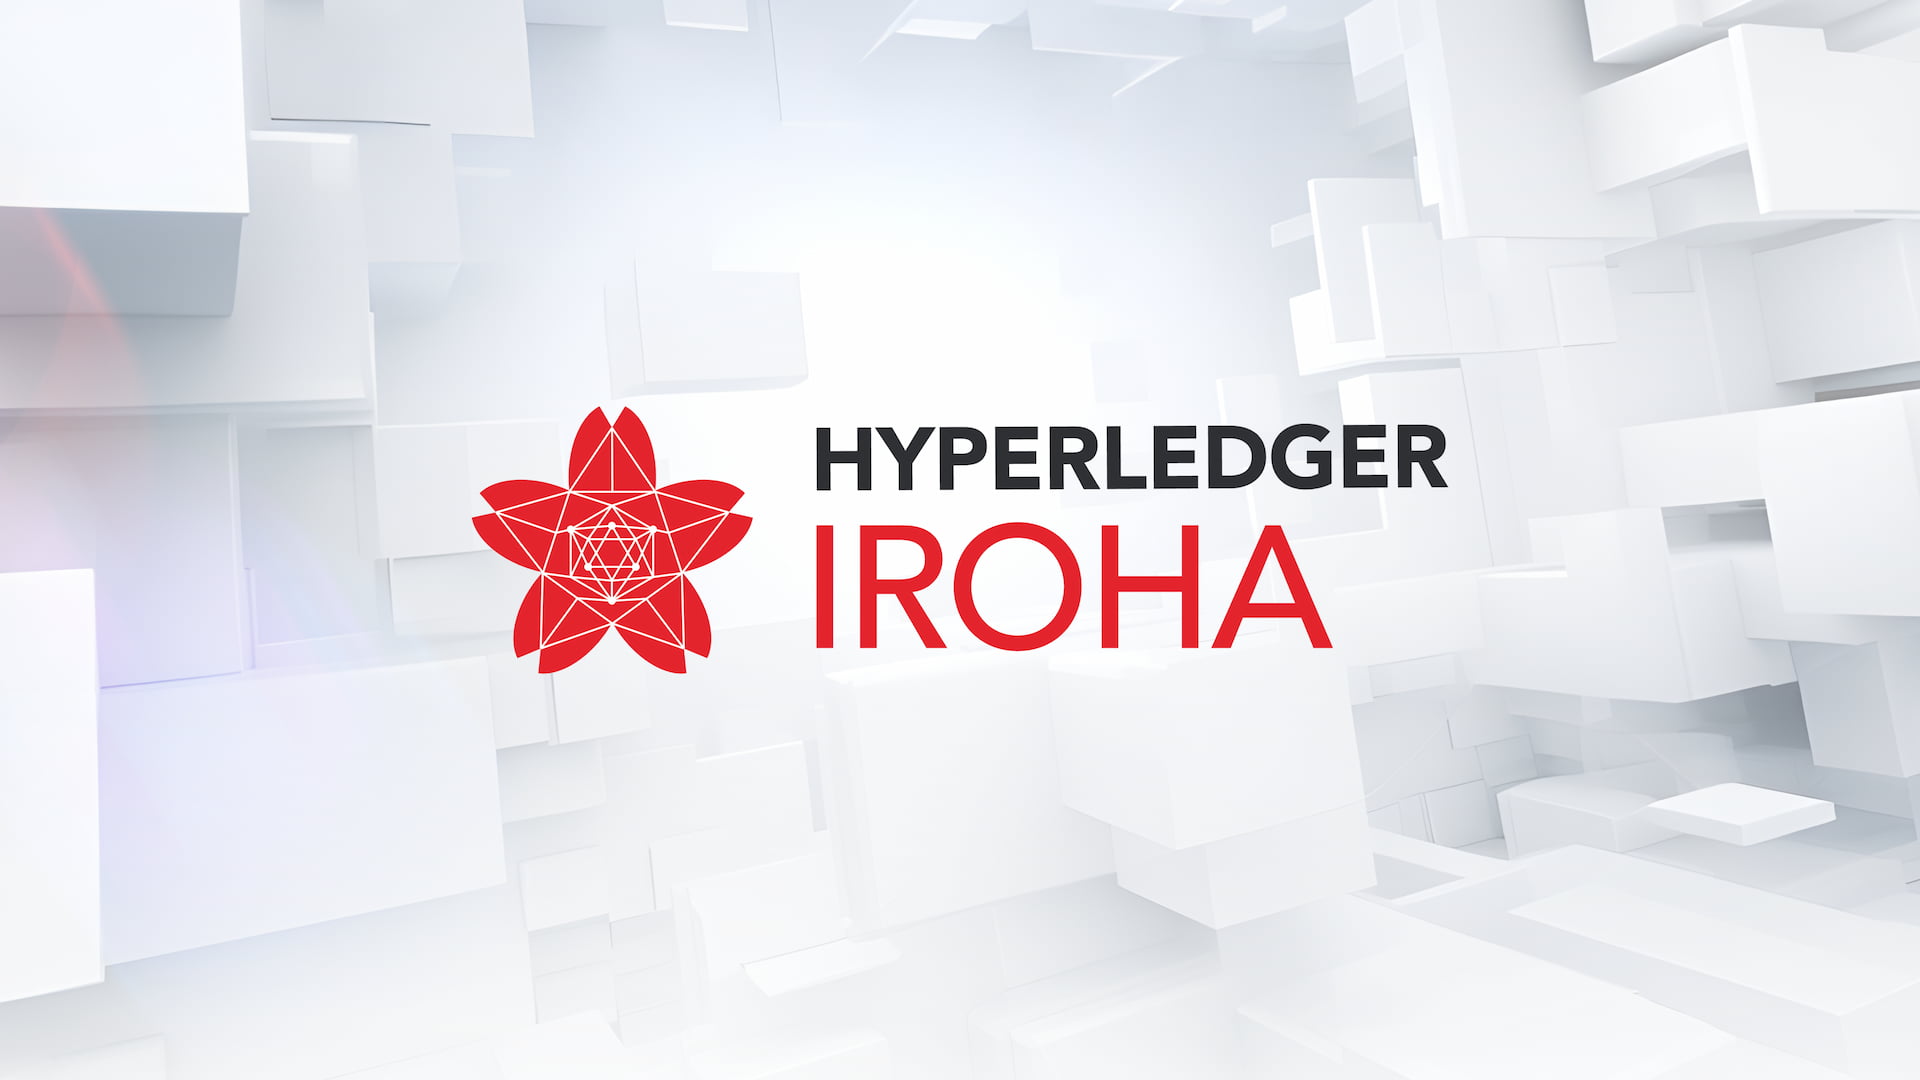 Hyperledger Iroha logo